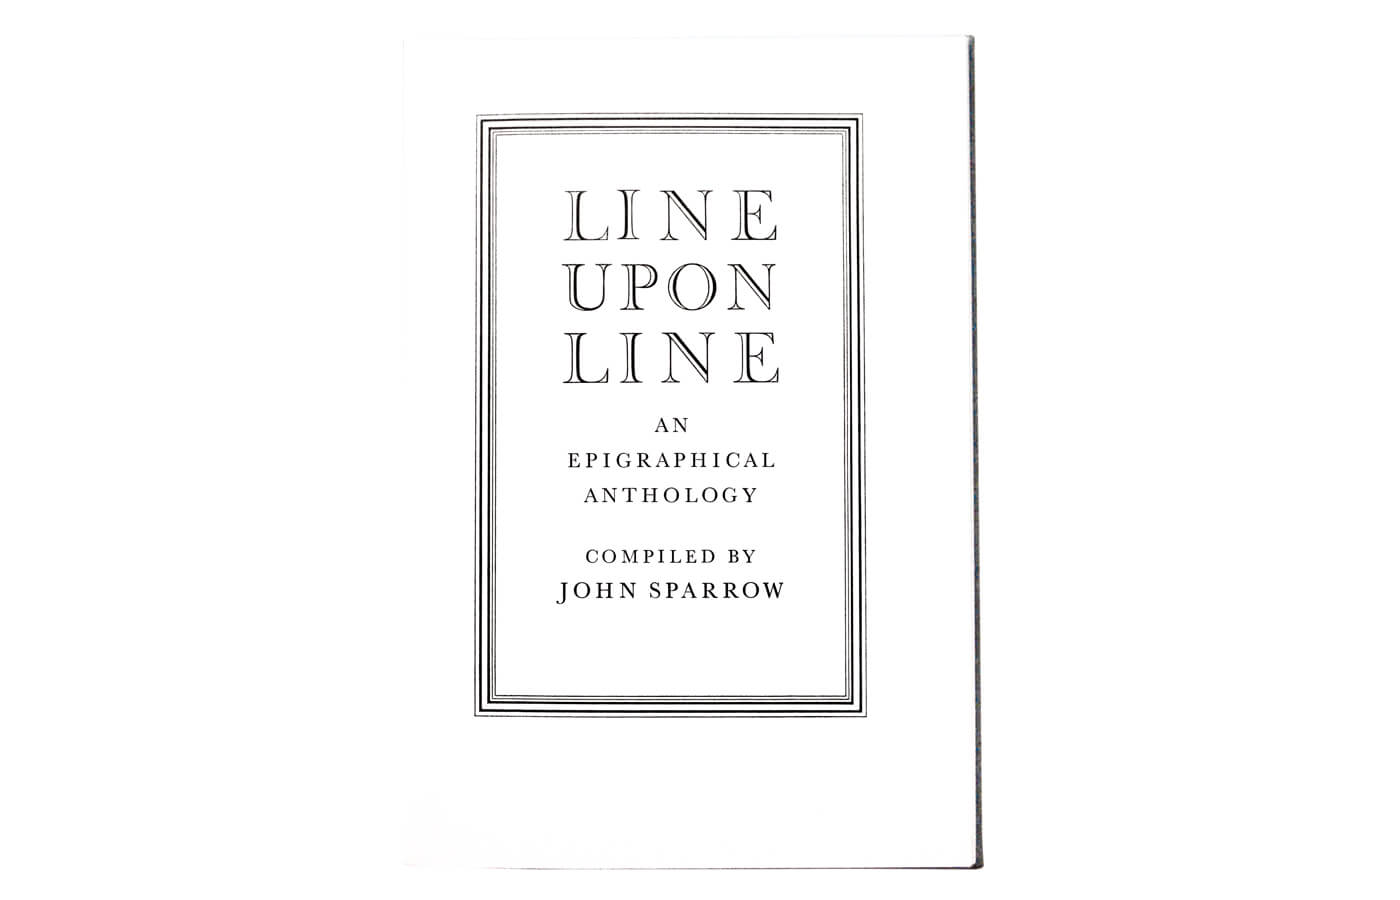 Line upon Line